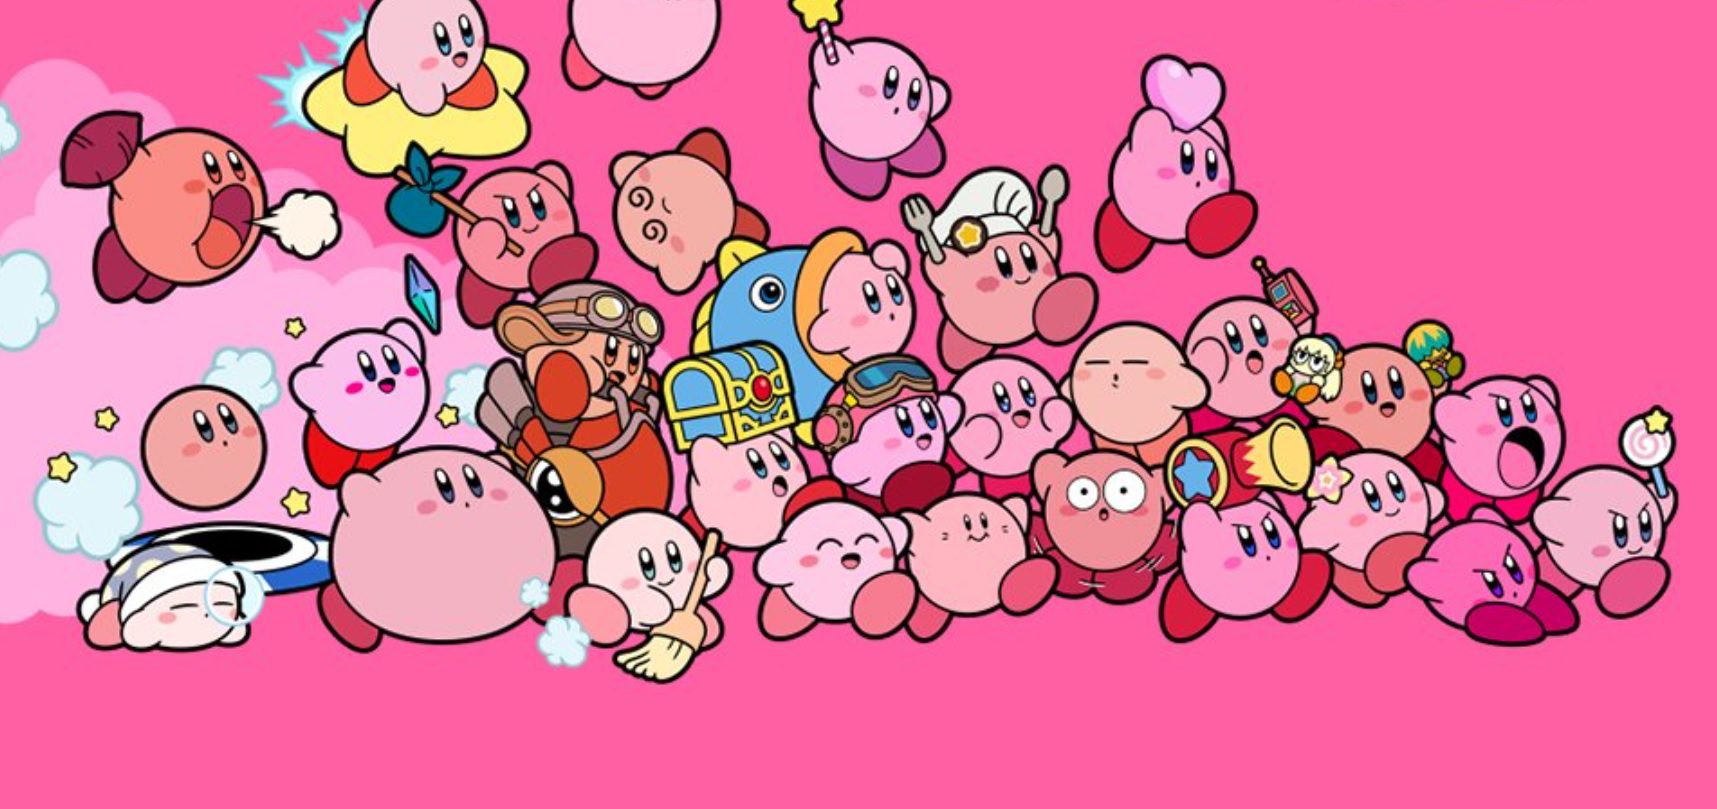 Kirby 30th anniversary